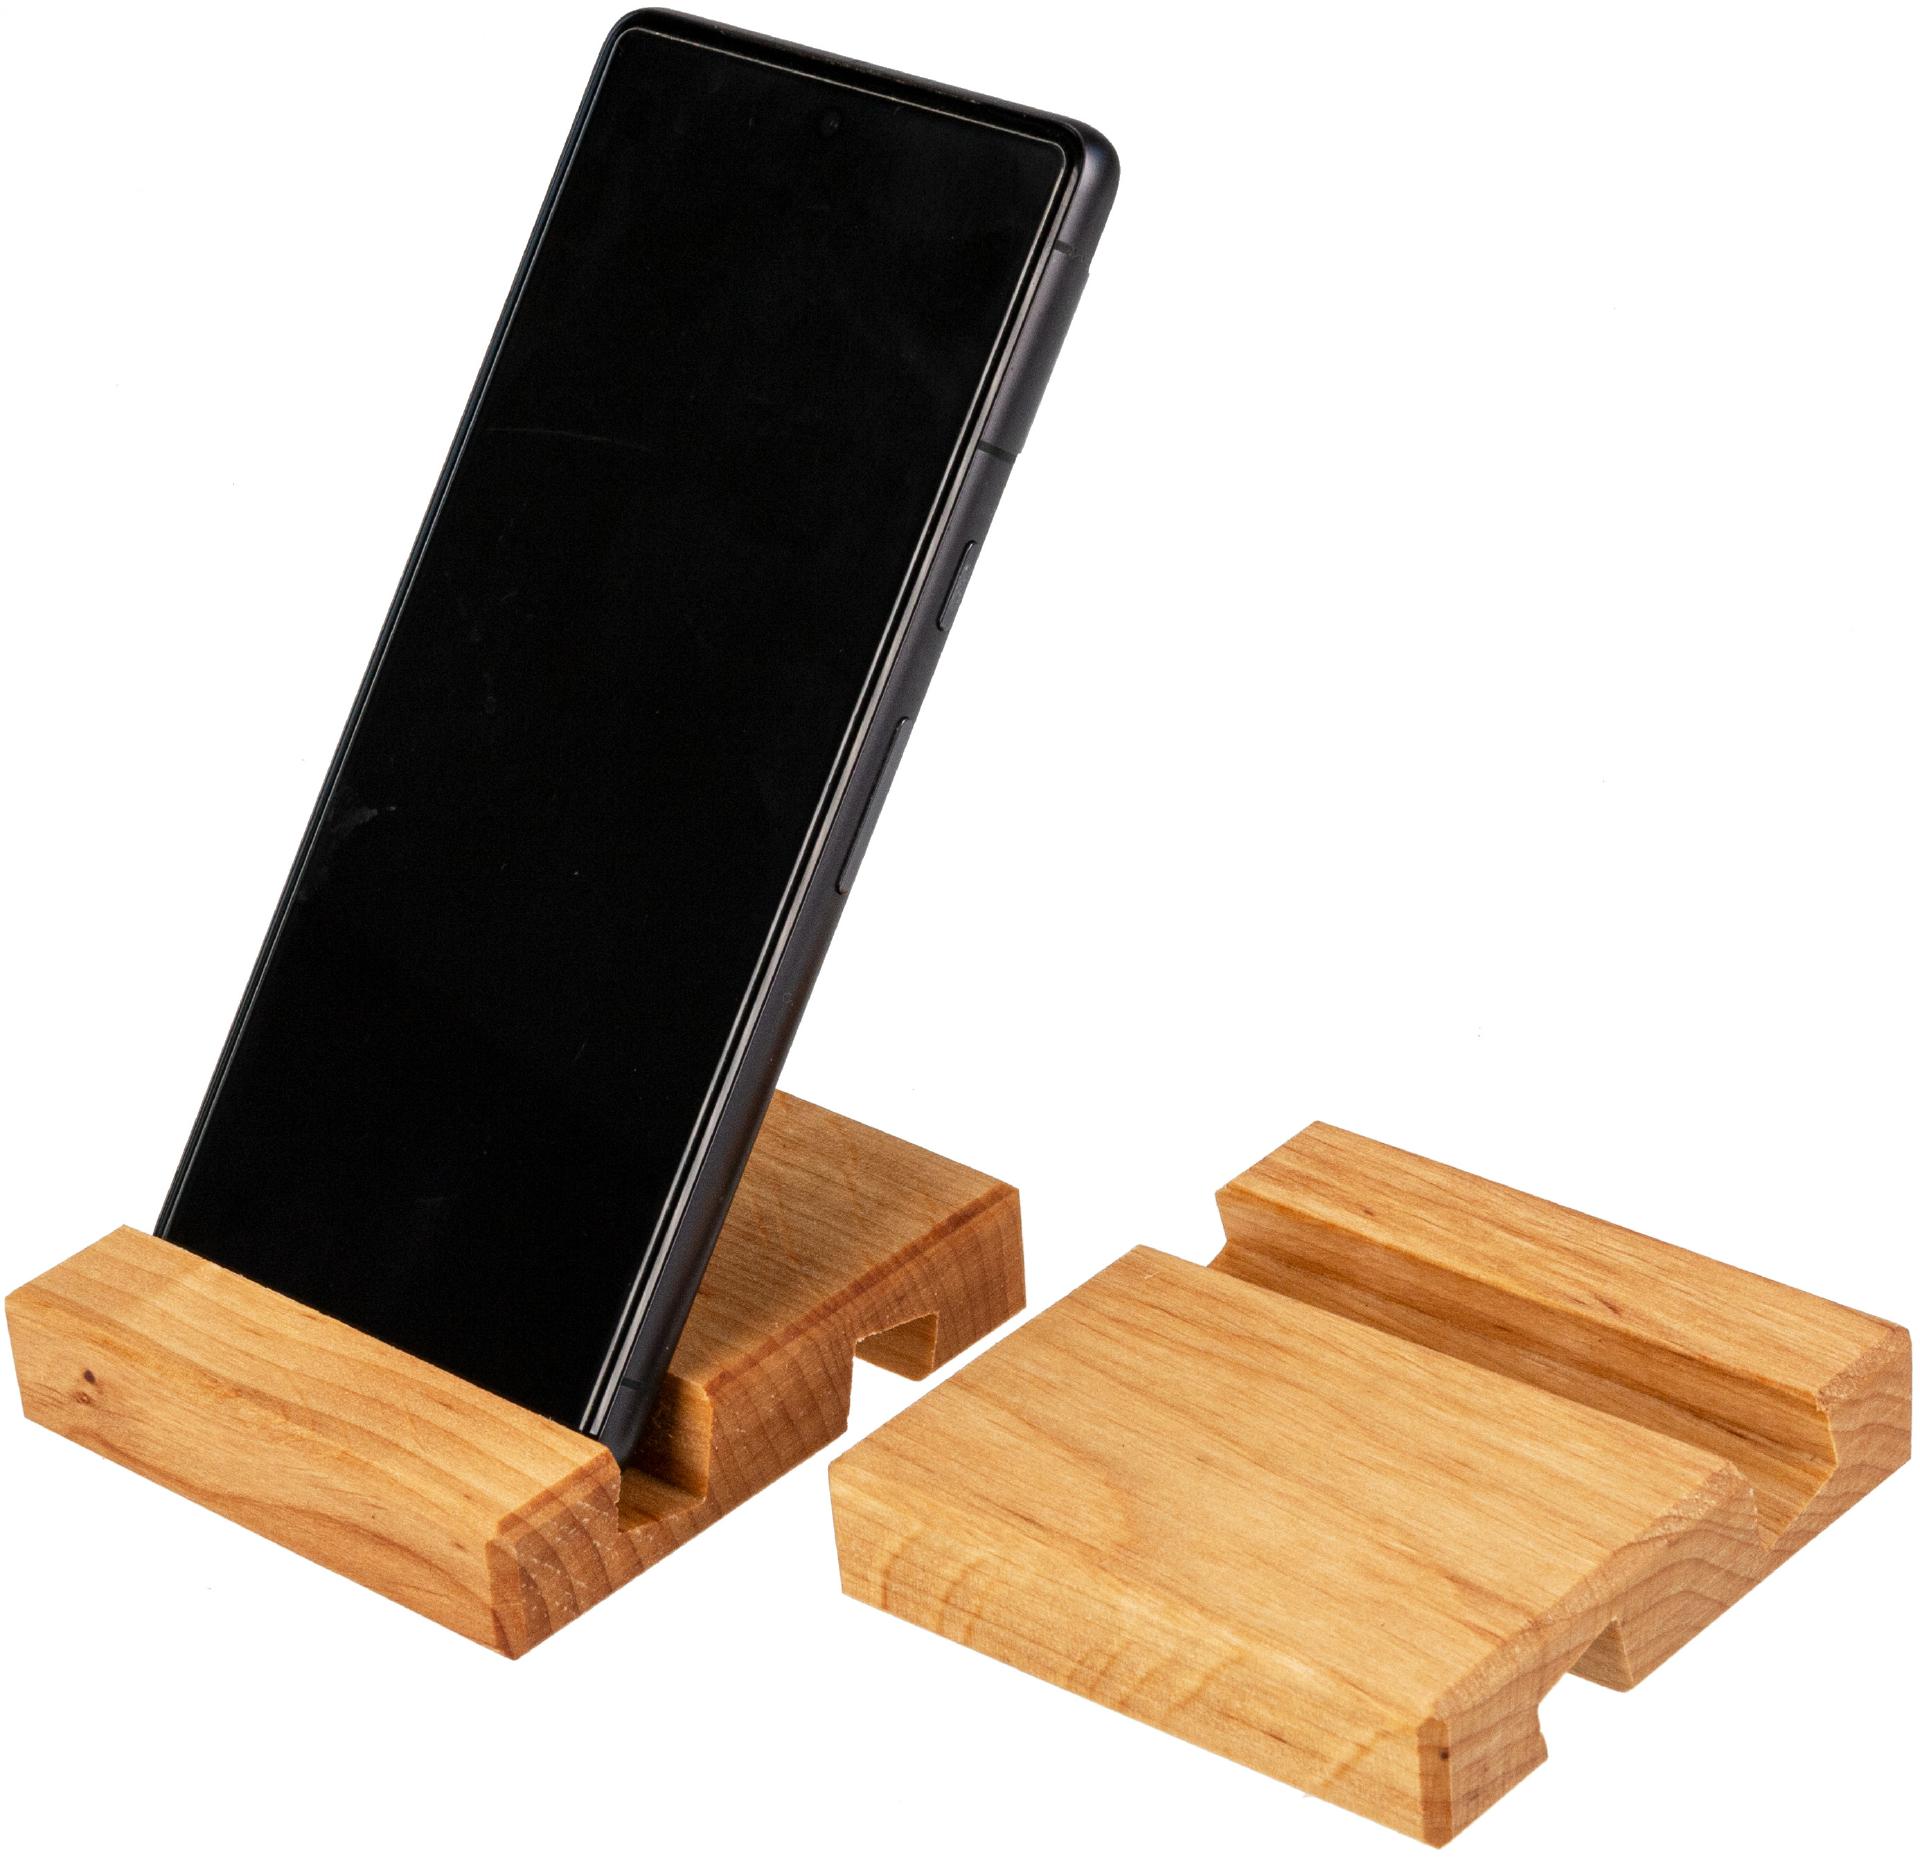 Massivholz Smartphone- und Tablet-Halter aus geöltem Erlenholz - 8 x 8,5 x  1,9 cm